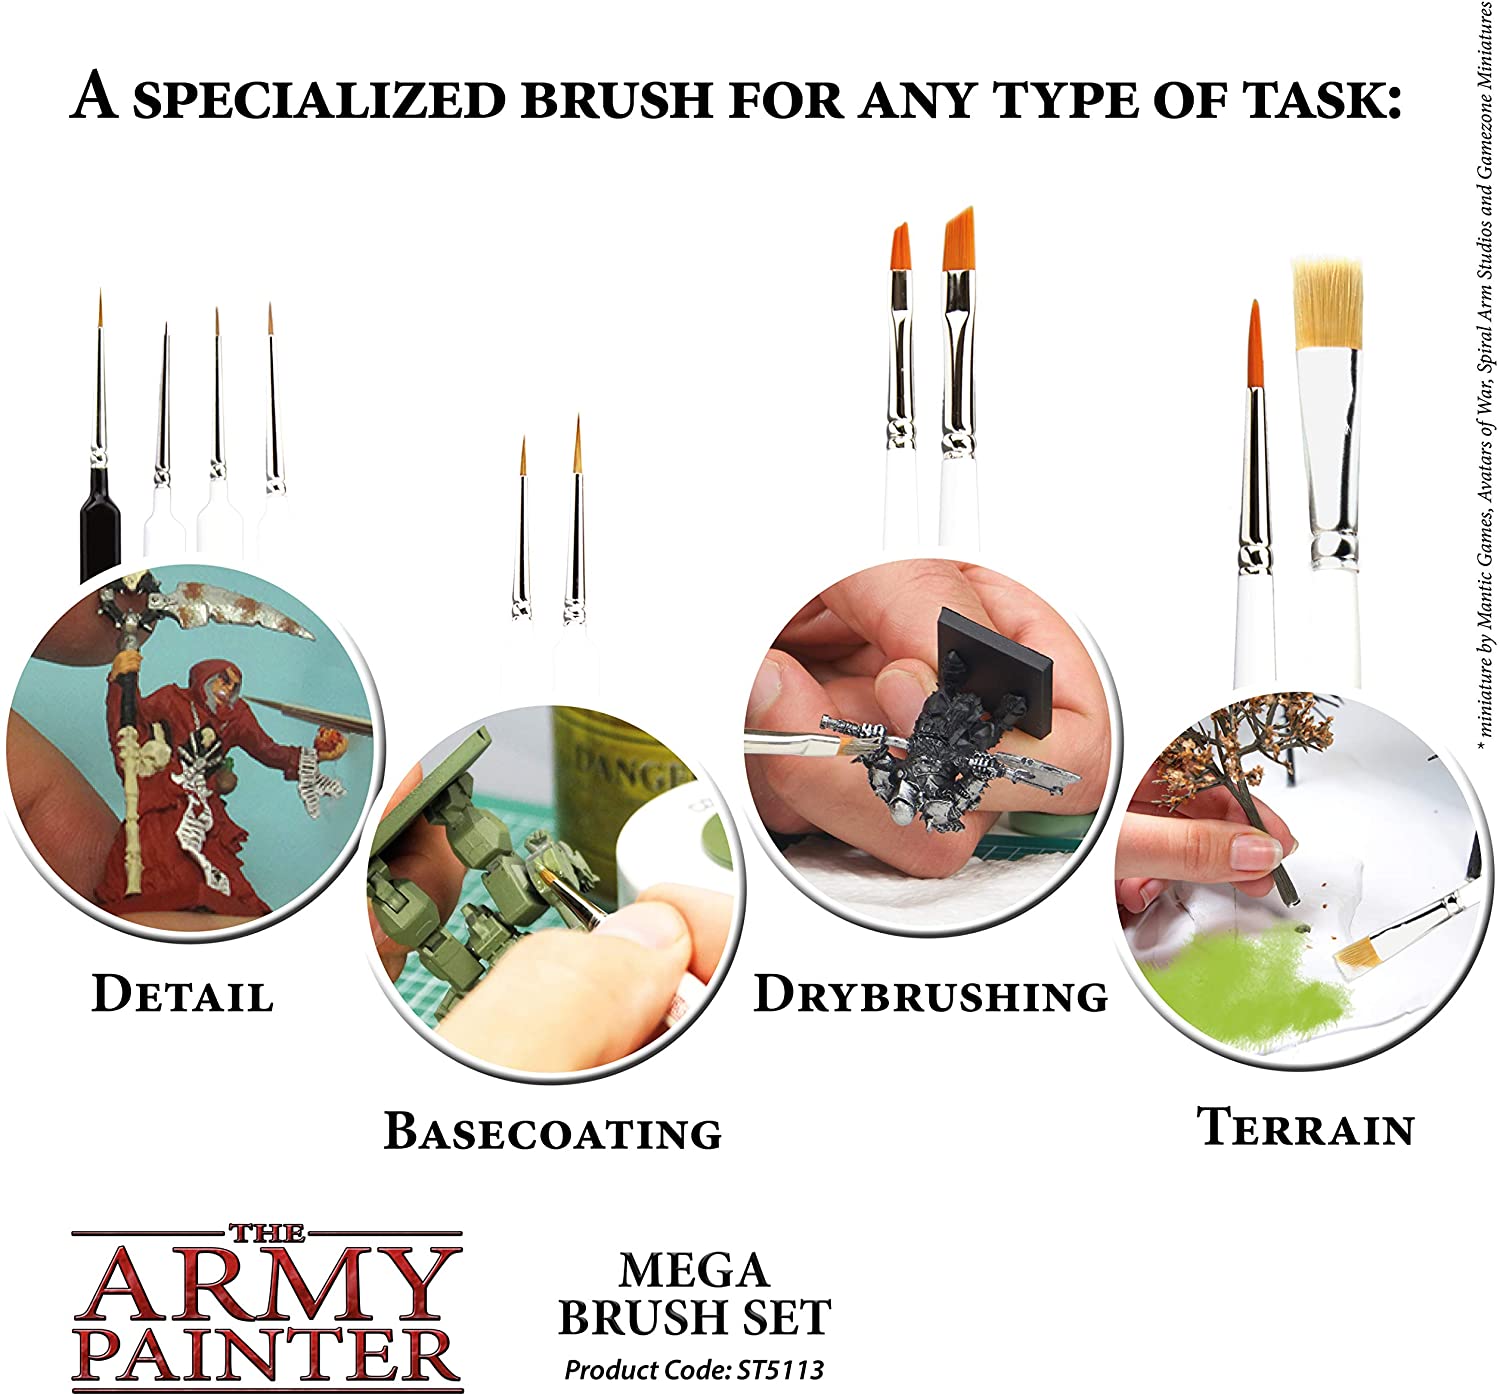 The Army Painter Wargames Mega Brush Set types